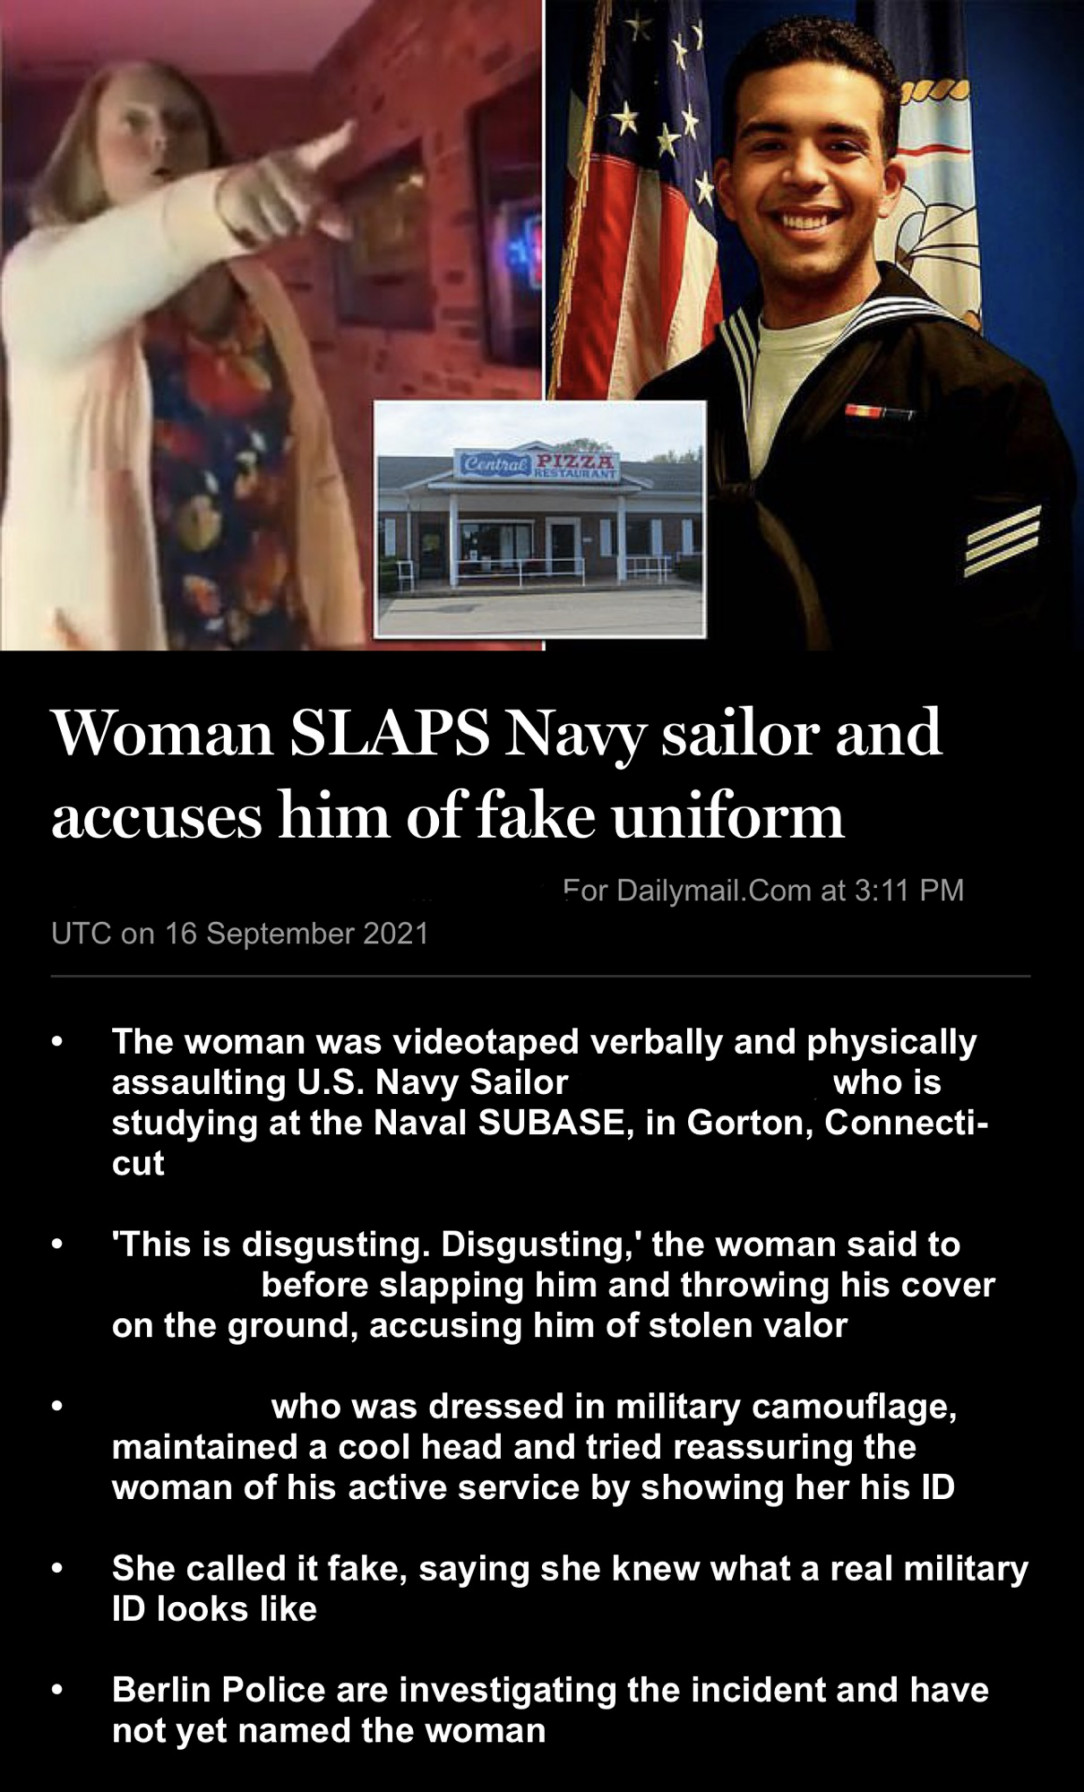 This woman slapping a US Navy sailor